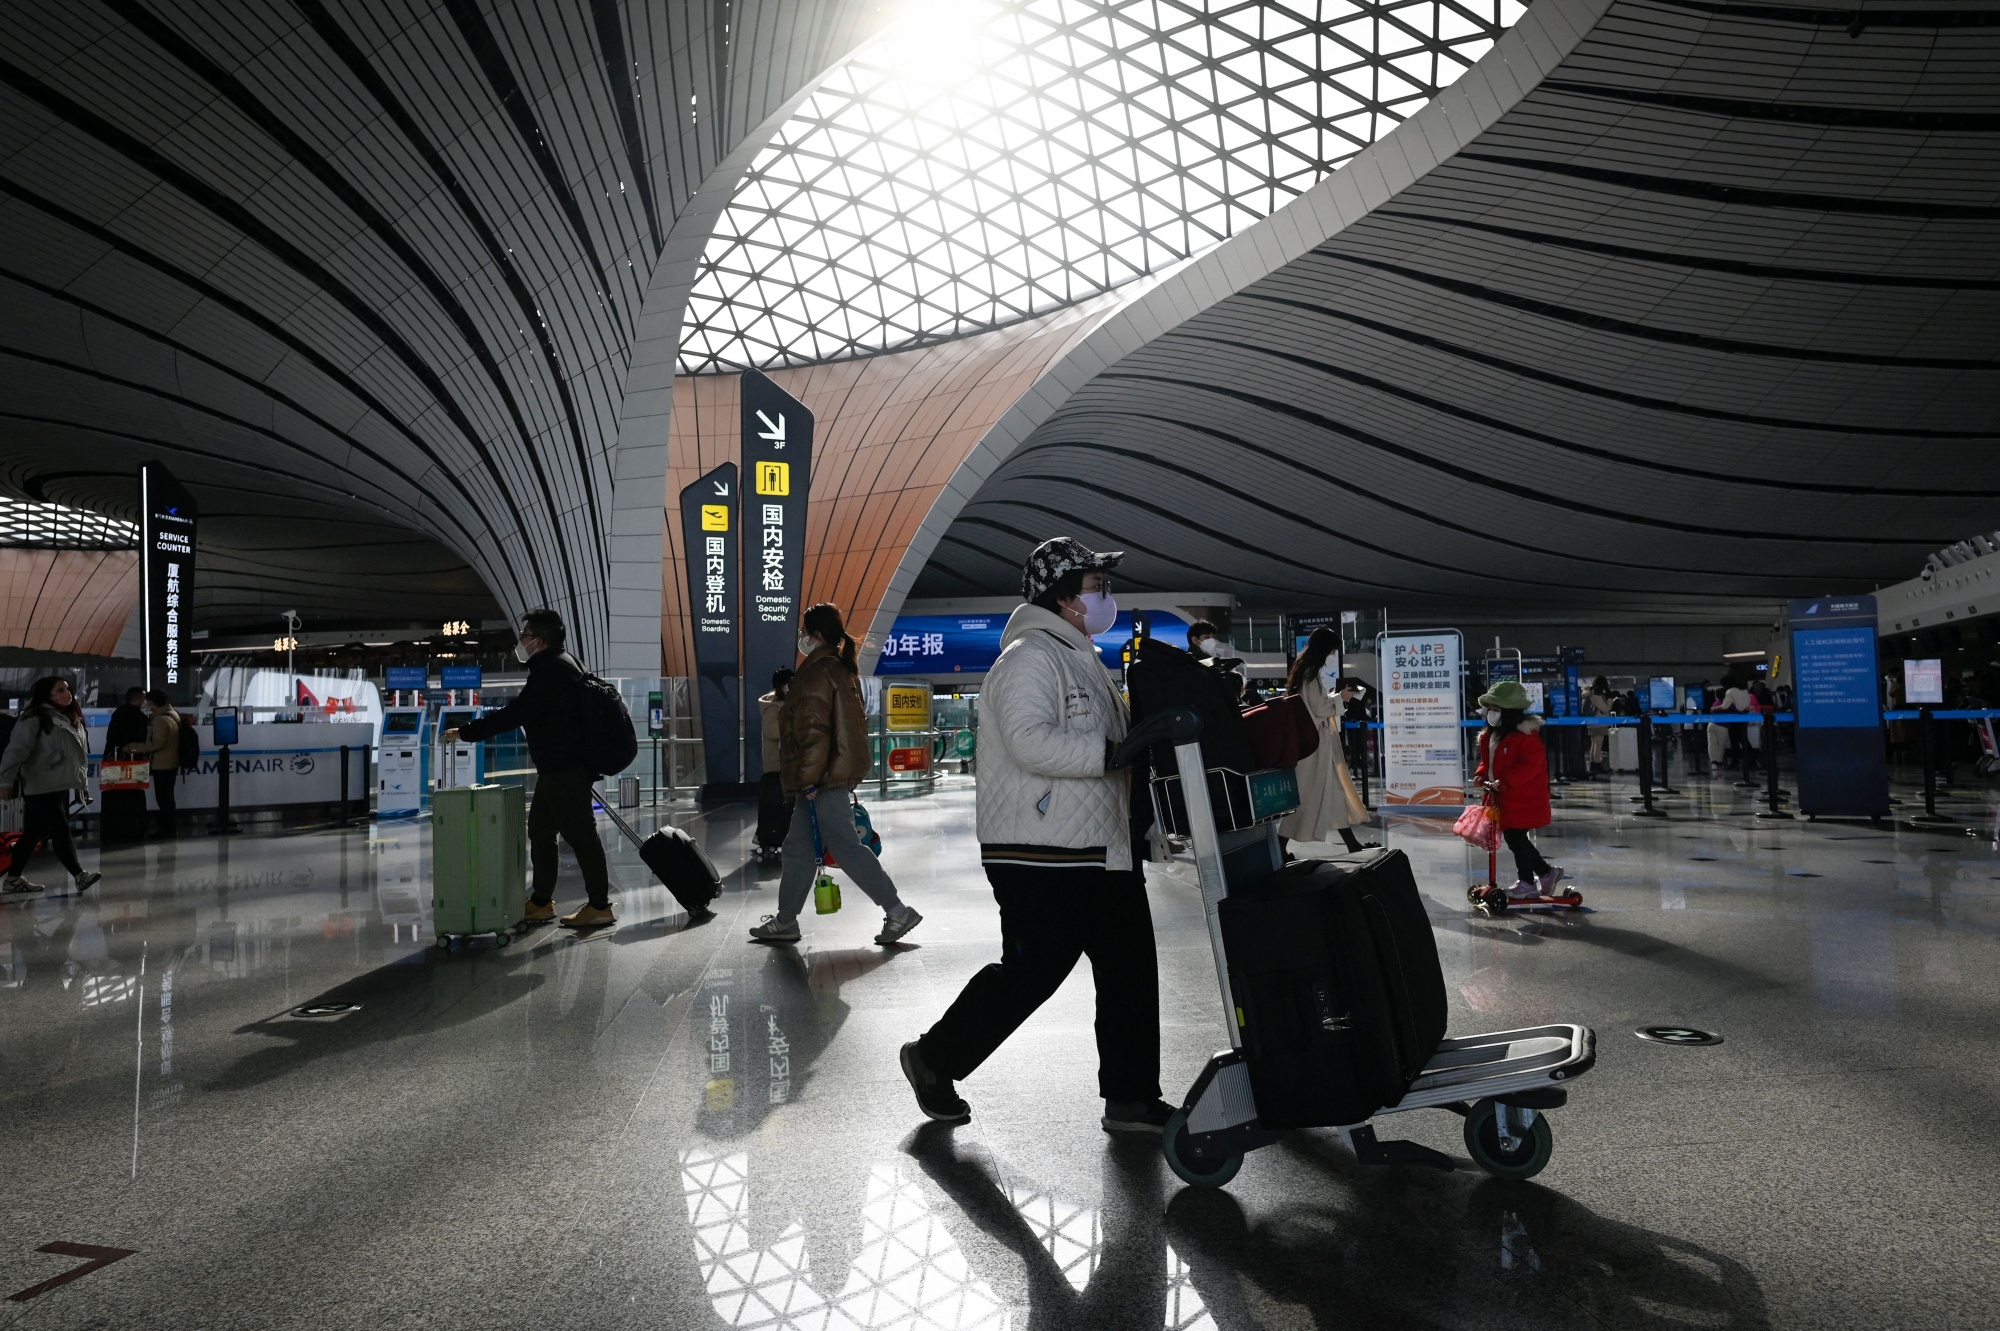 Terminal 2 Opens at Shanghai's Hongqiao Airport - China Briefing News